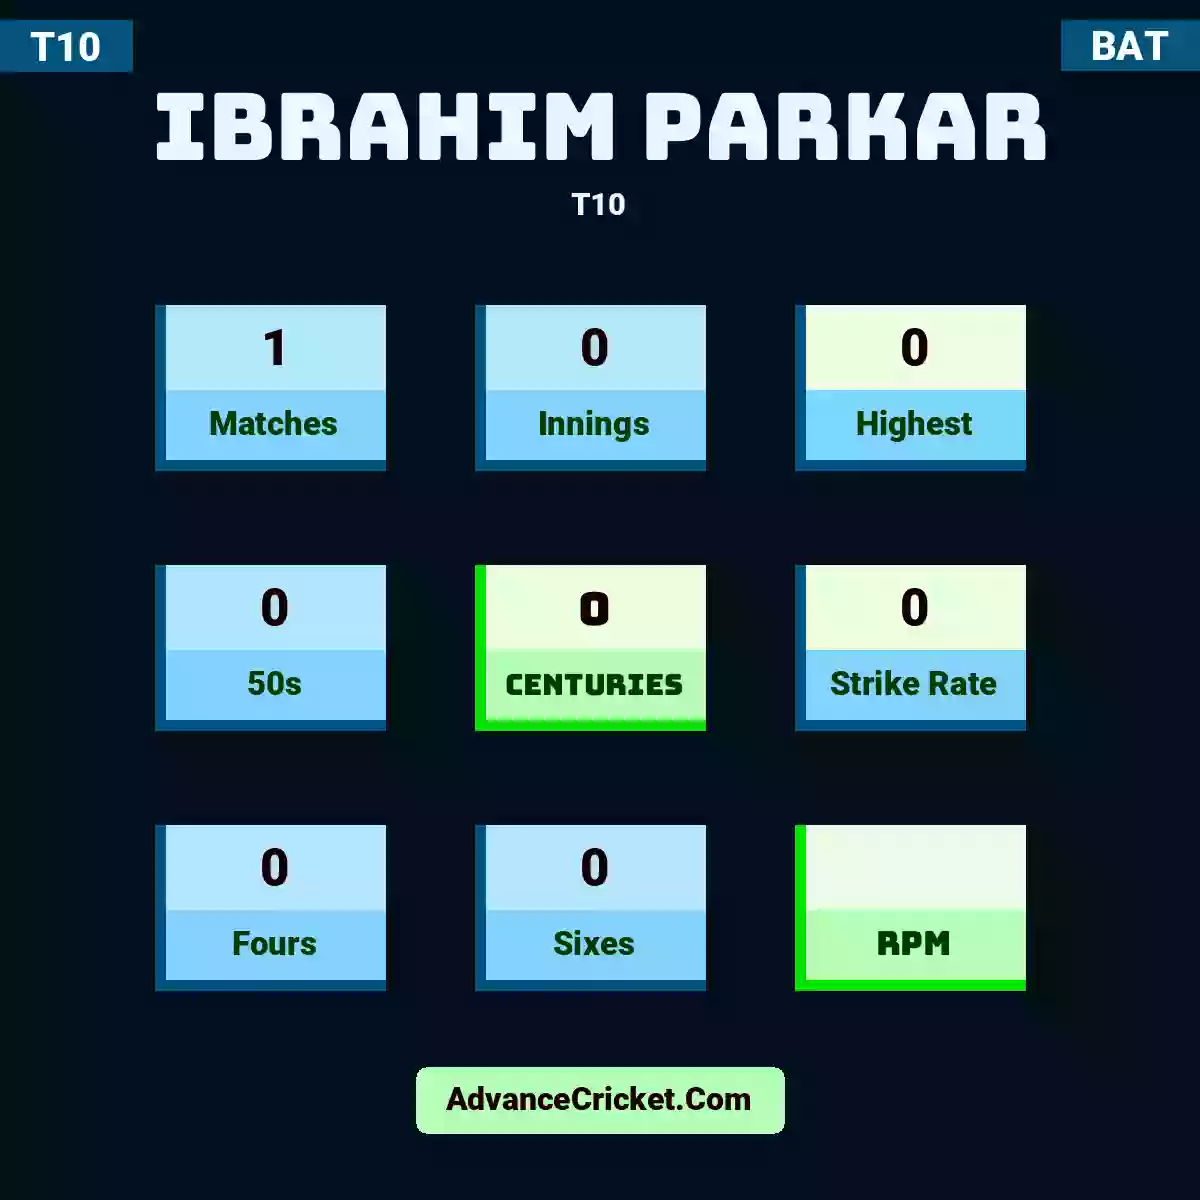 Ibrahim Parkar T10 , Ibrahim Parkar played 1 matches, scored 0 runs as highest, 0 half-centuries, and 0 centuries, with a strike rate of 0. I.Parkar hit 0 fours and 0 sixes.